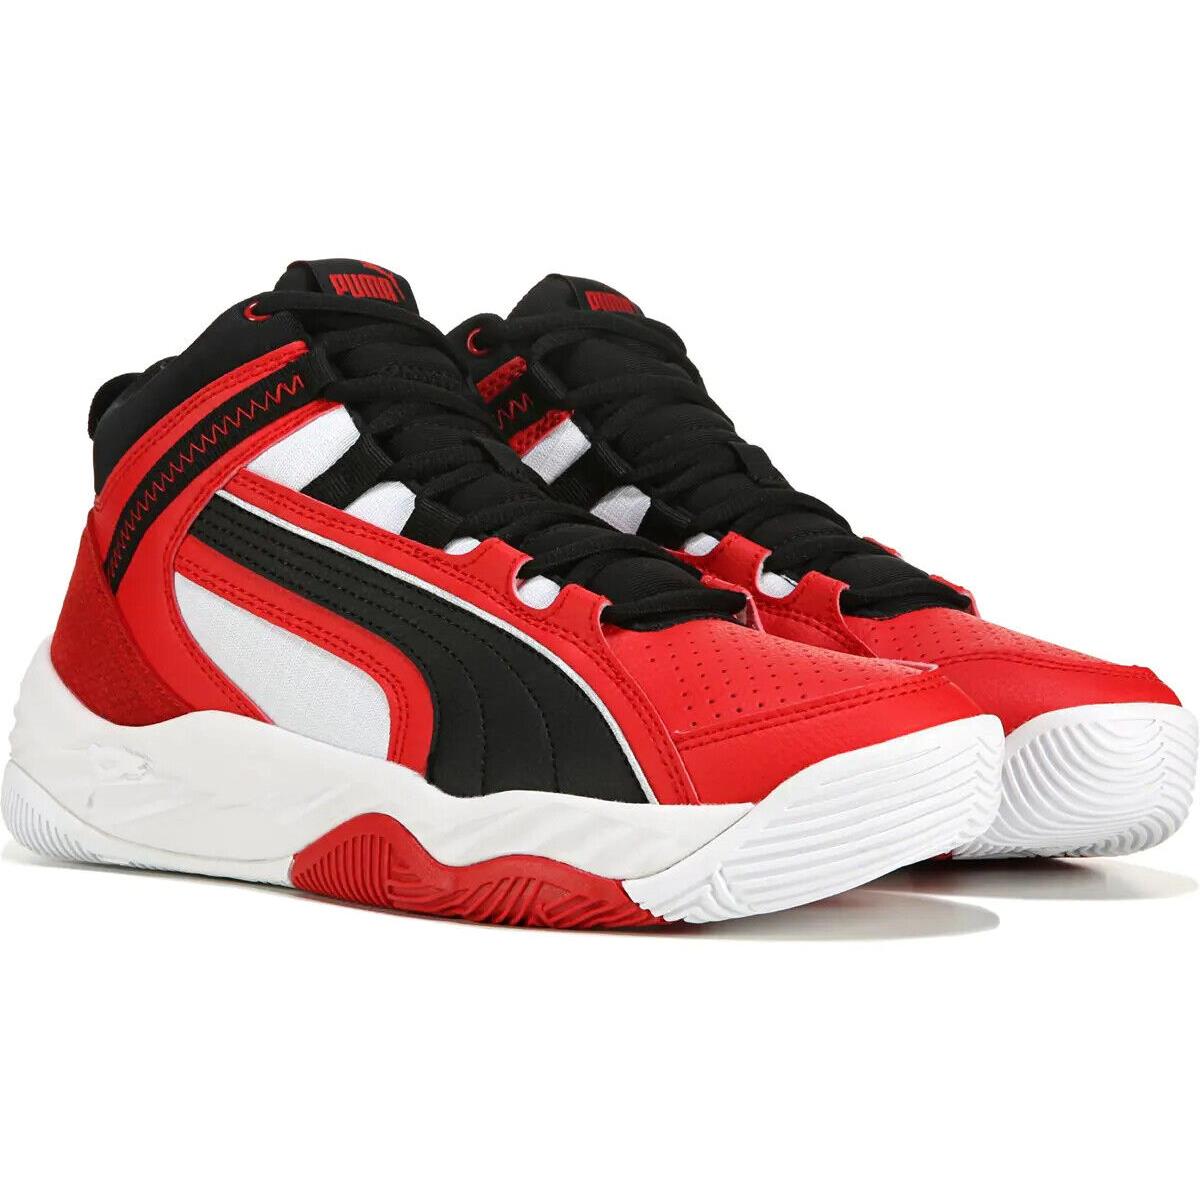 Puma Rebound Future Evo Mens Basketball Shoe Red Black White 374899-NEW Sz 11.5